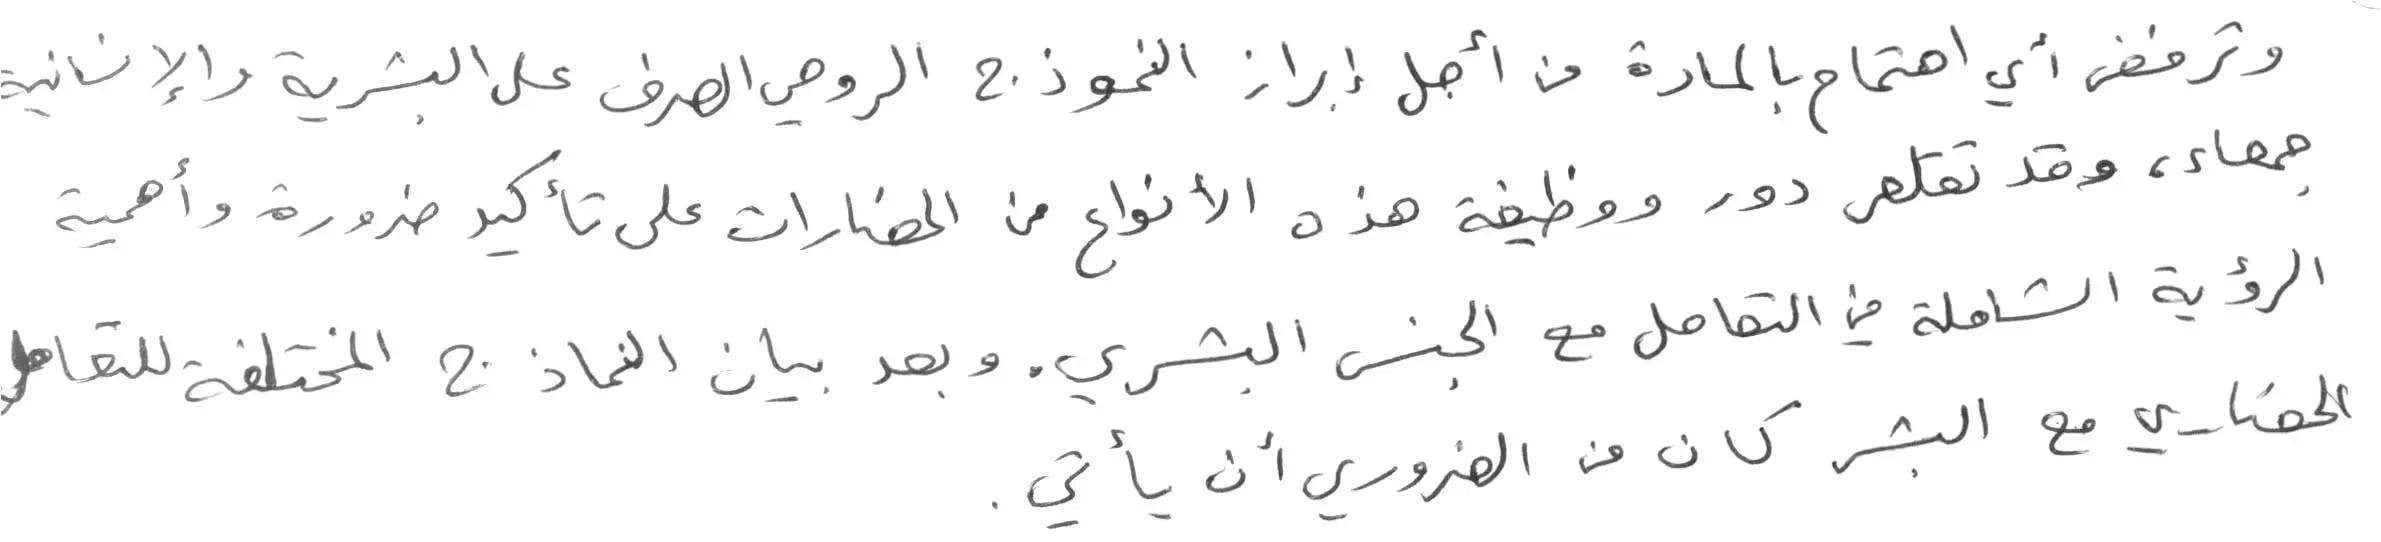 arabic-handwriting-11